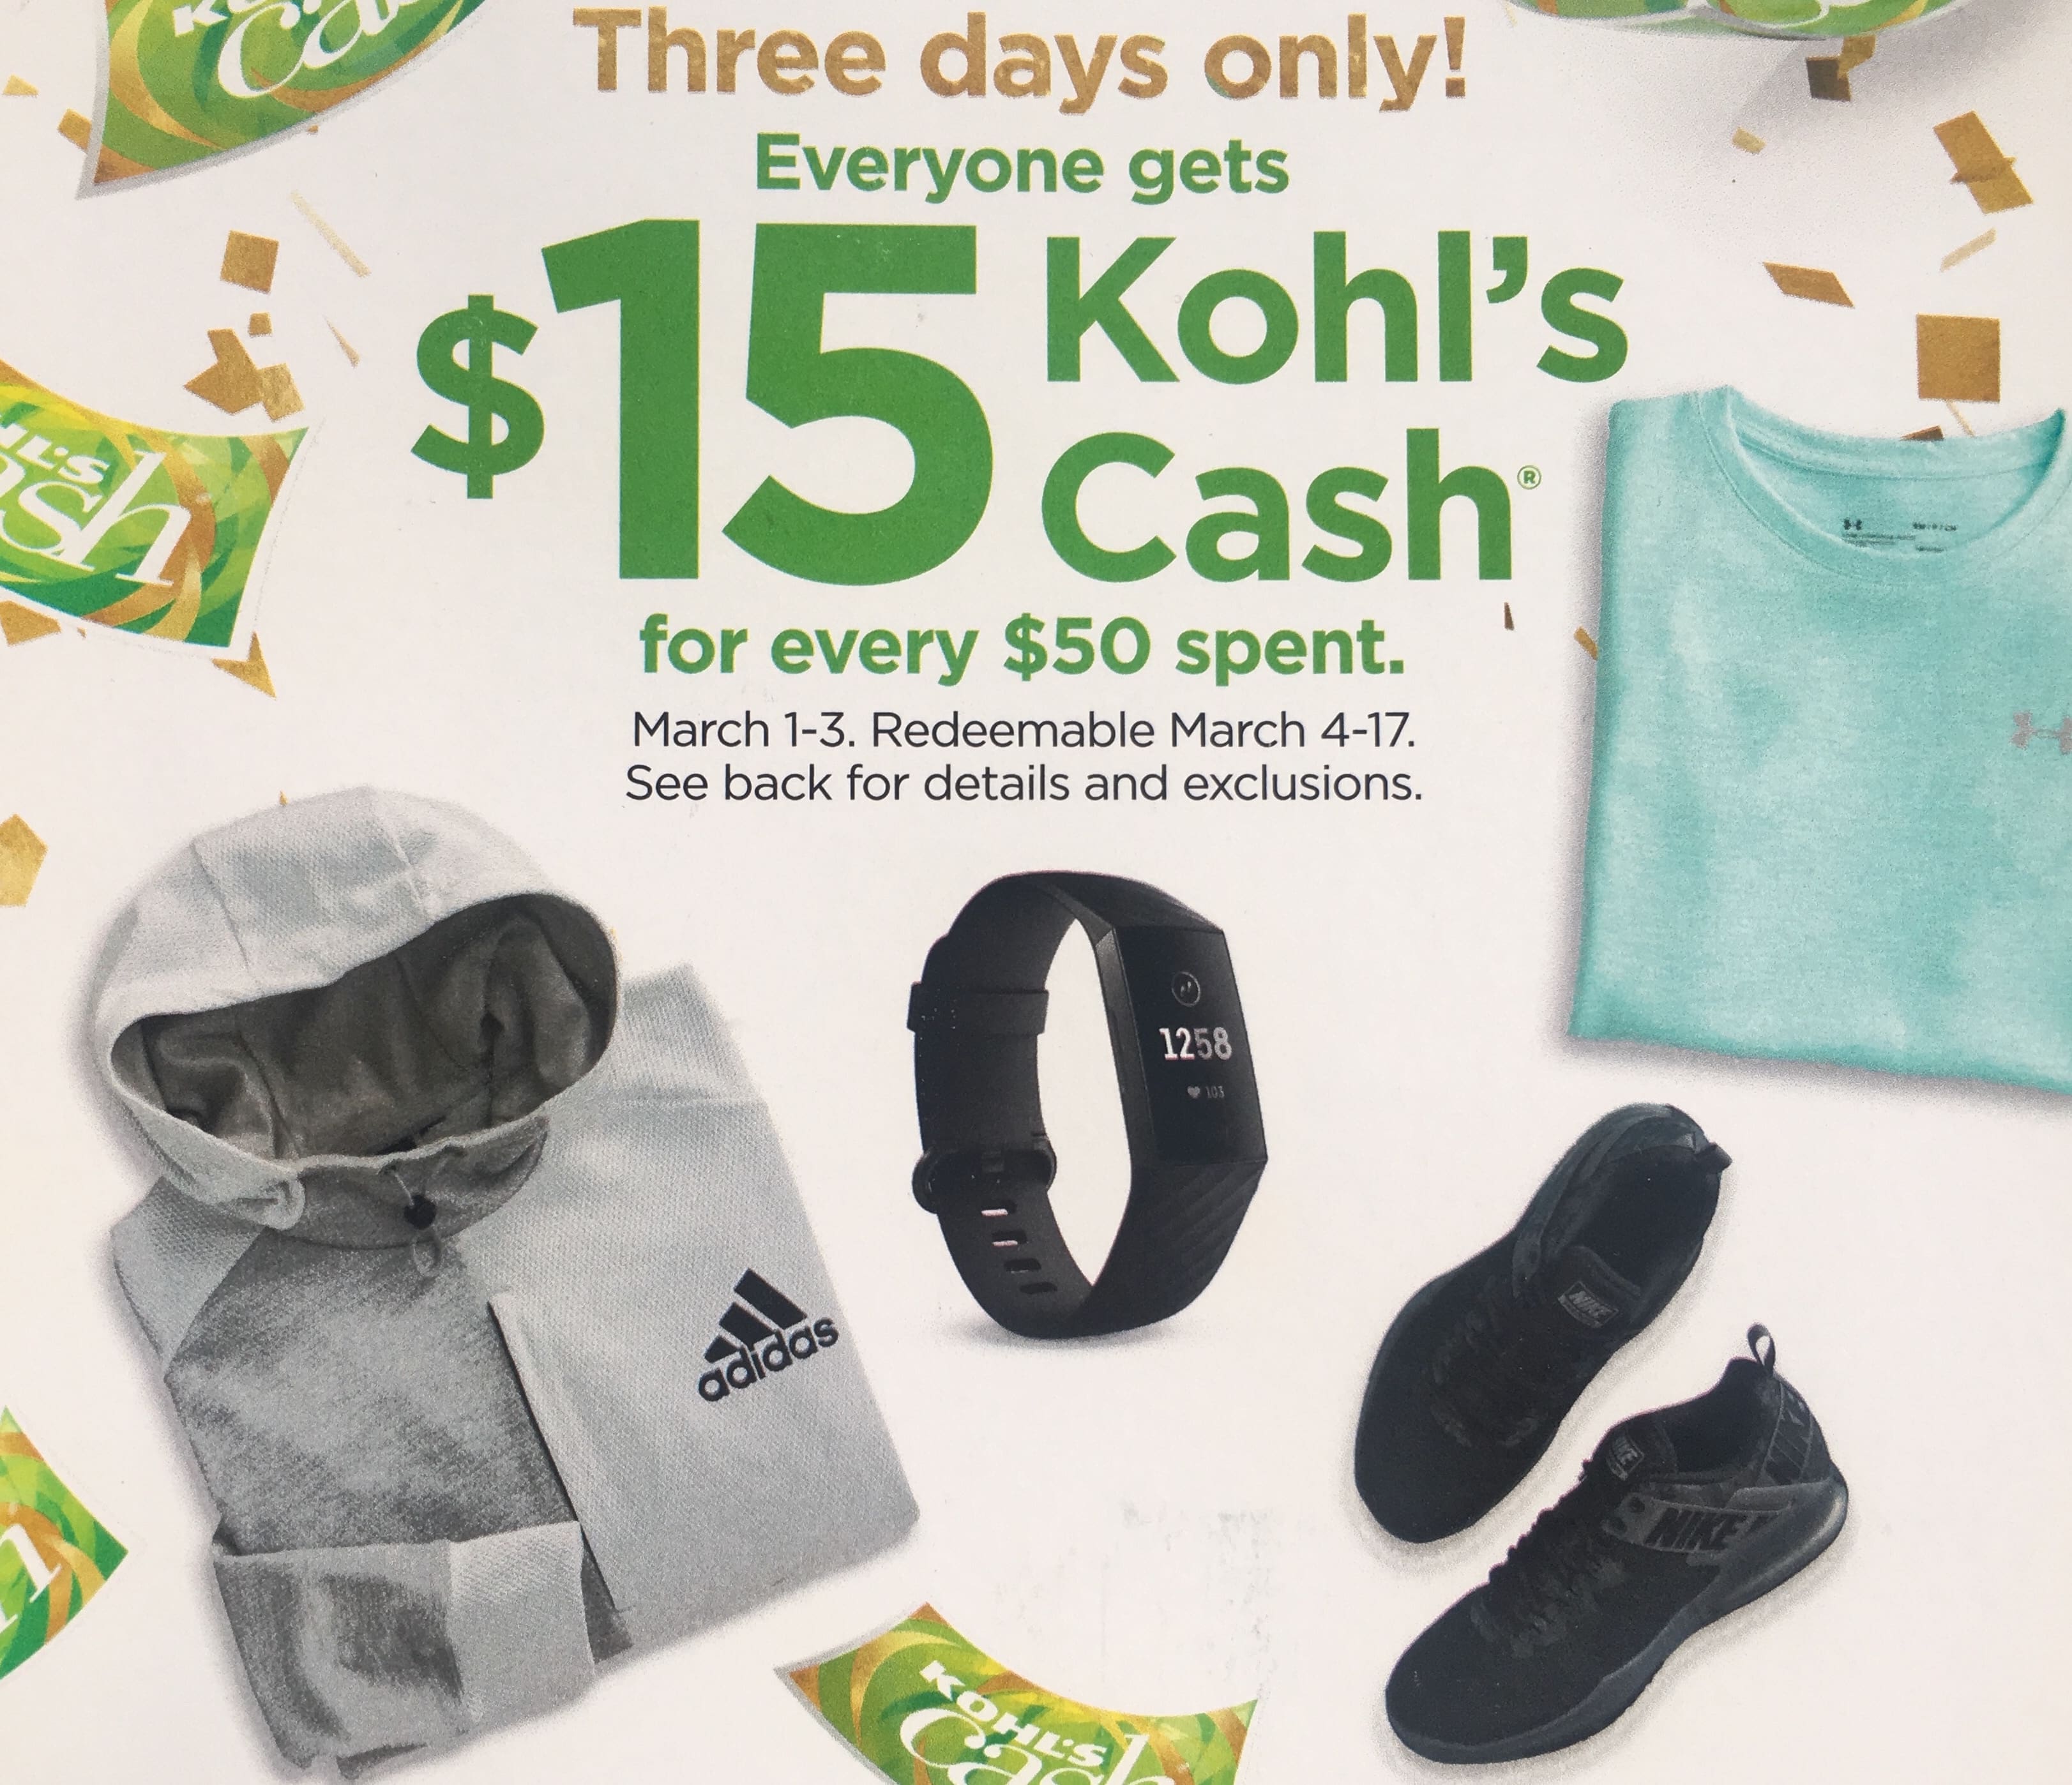 Kohl's Cash Anniversary Sale: $15 Kohl's Cash